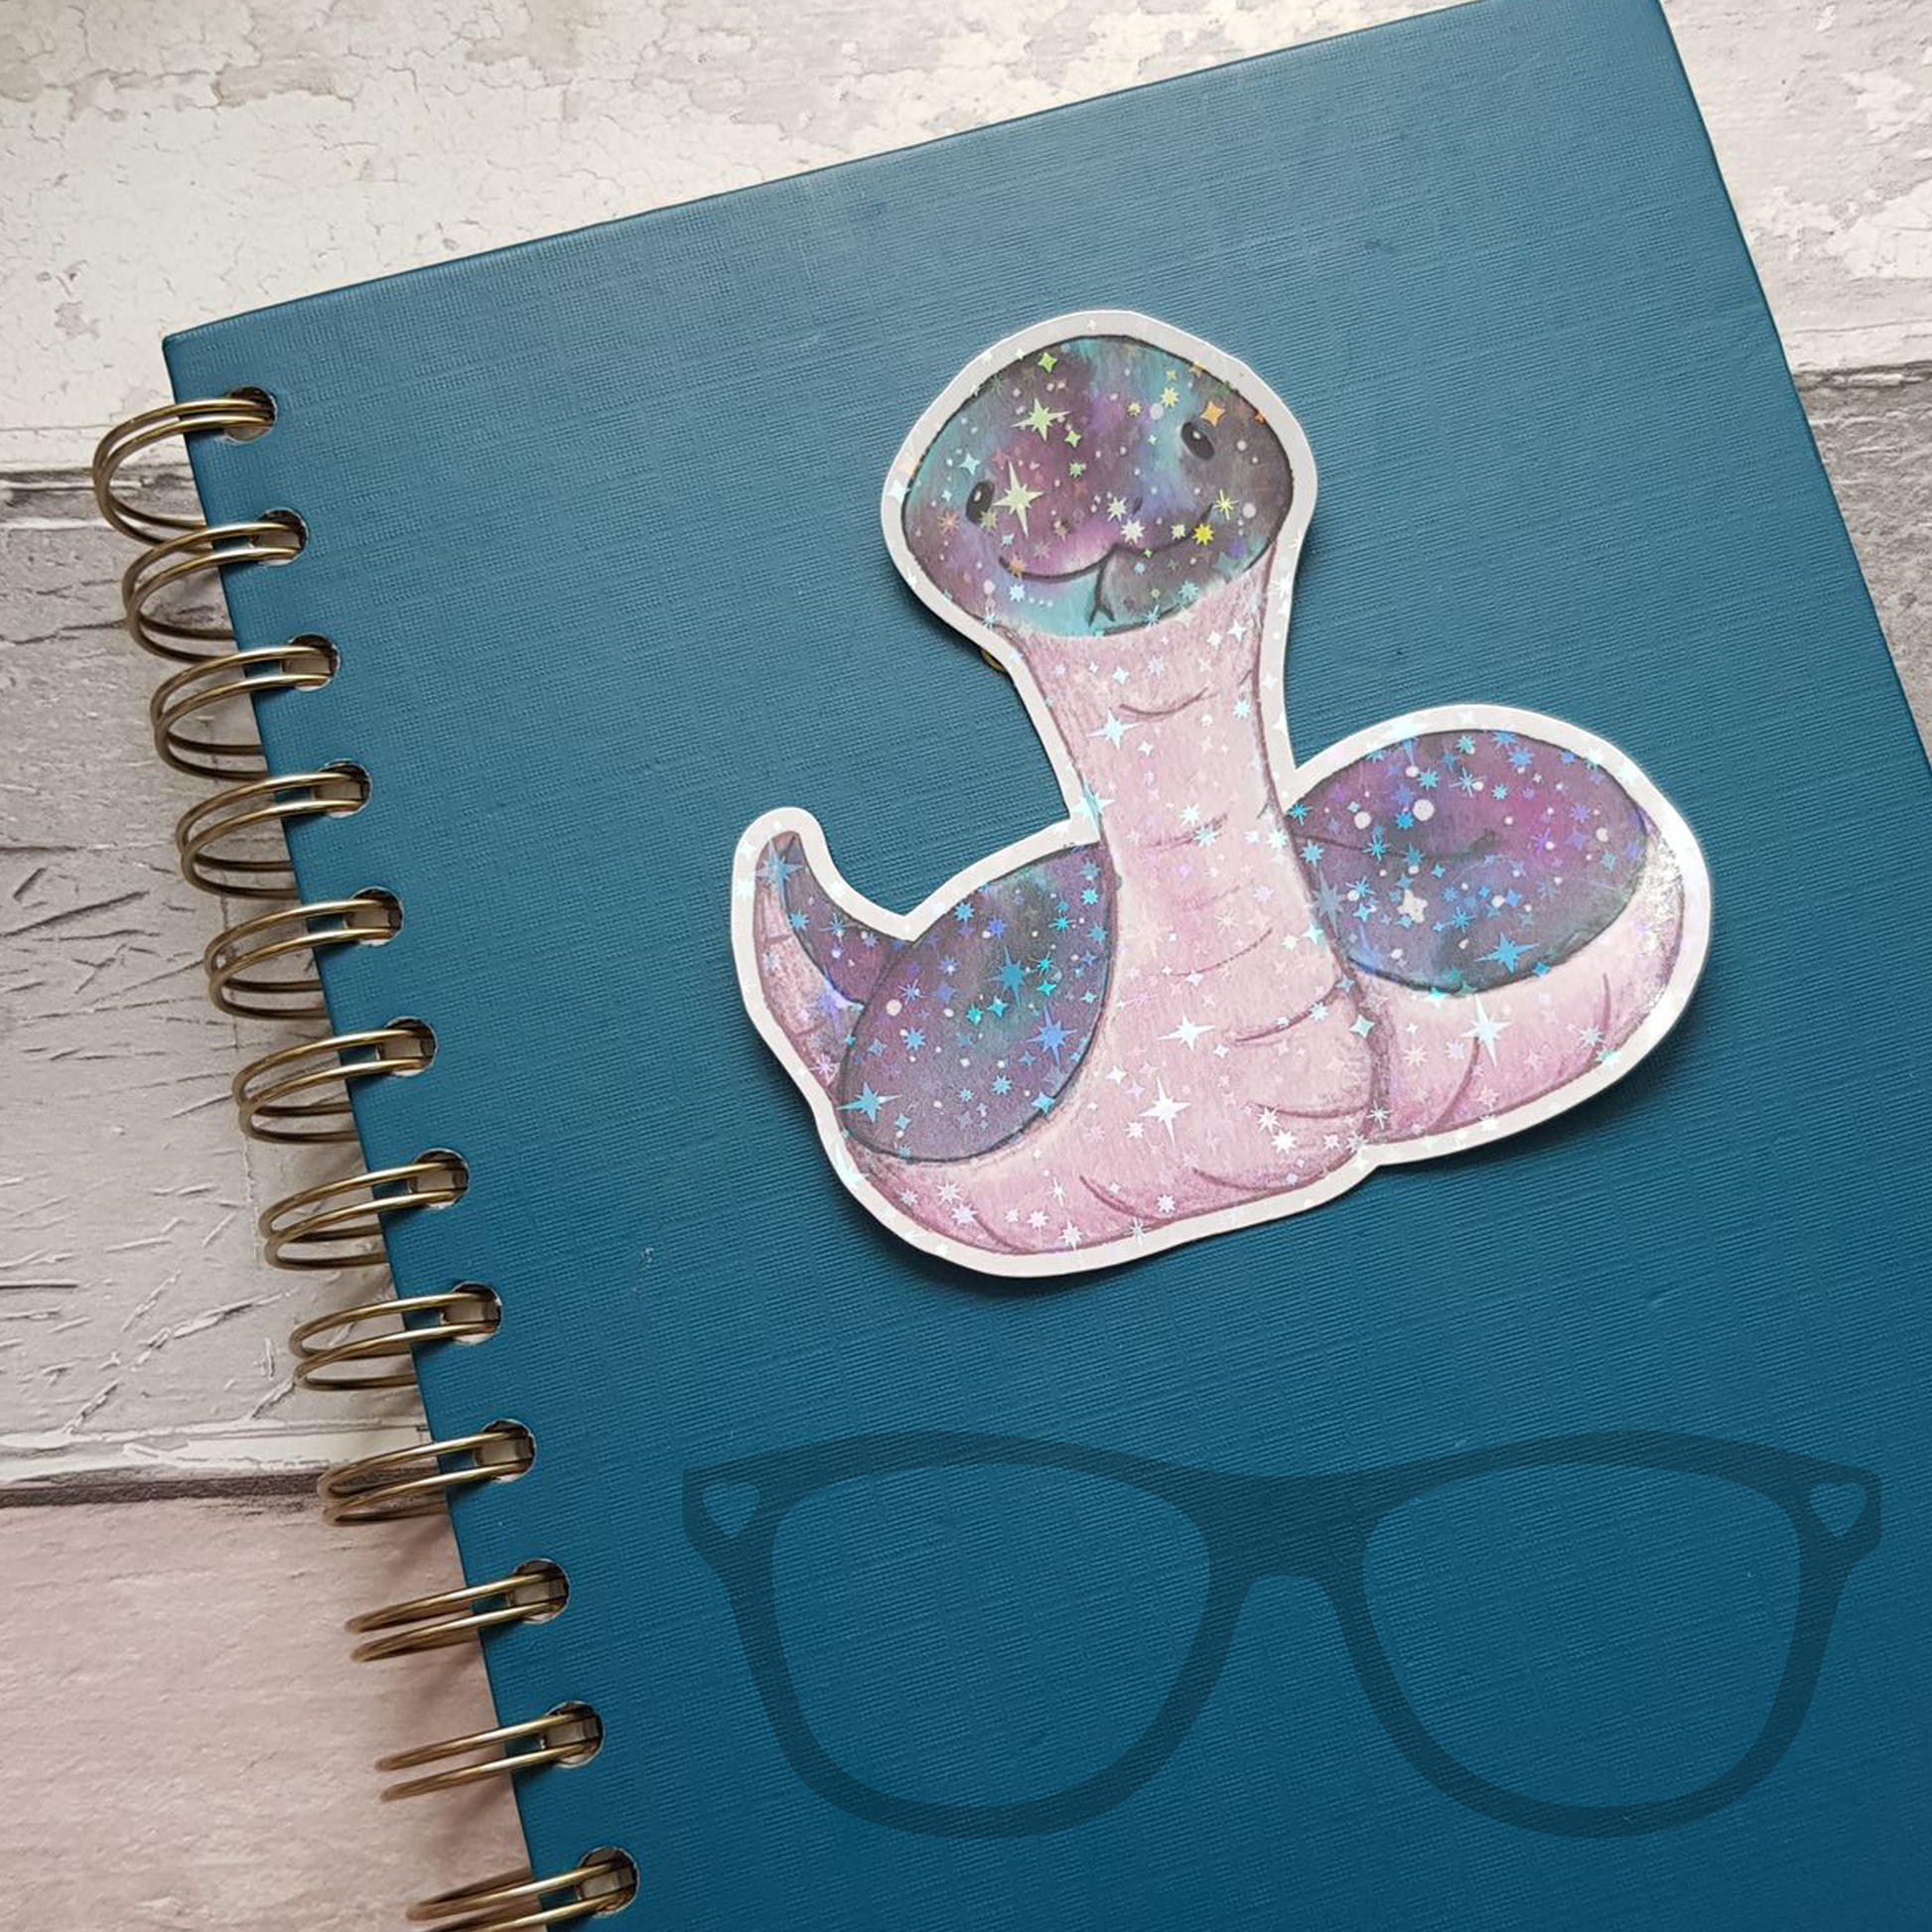 Snake vinyl sticker with star sparkle on notebook